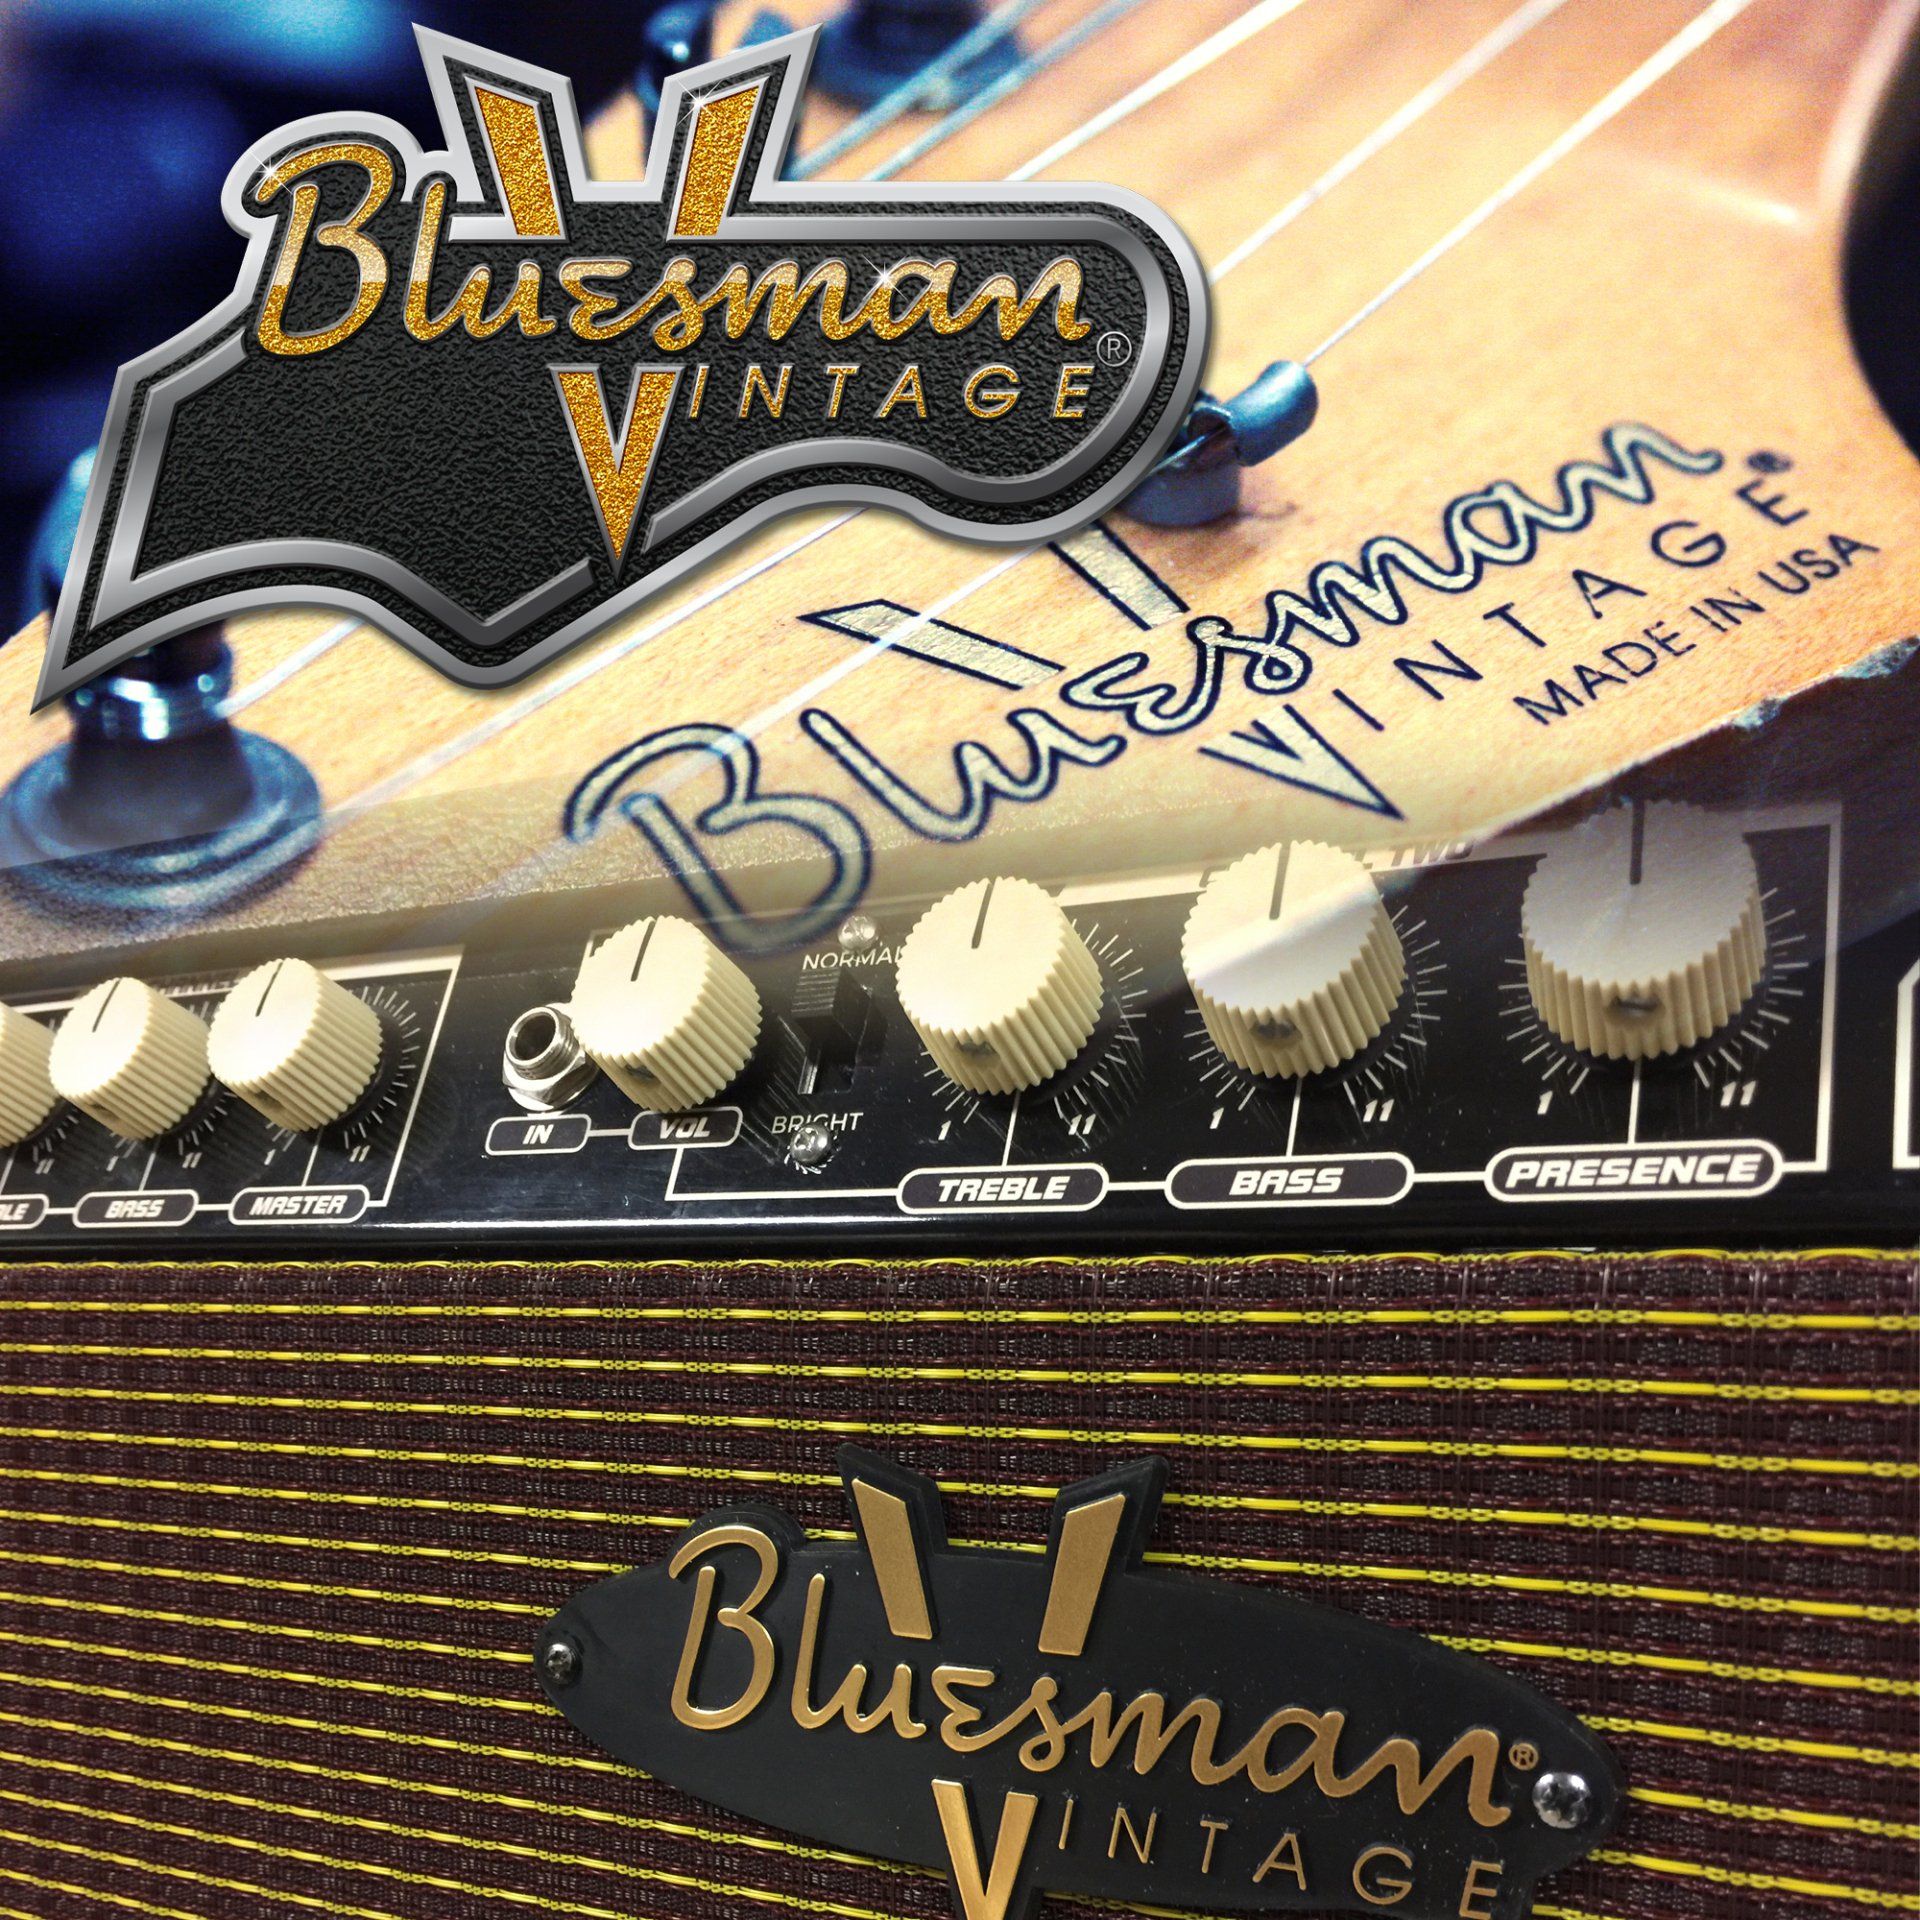 Bluesman Vintage, branding